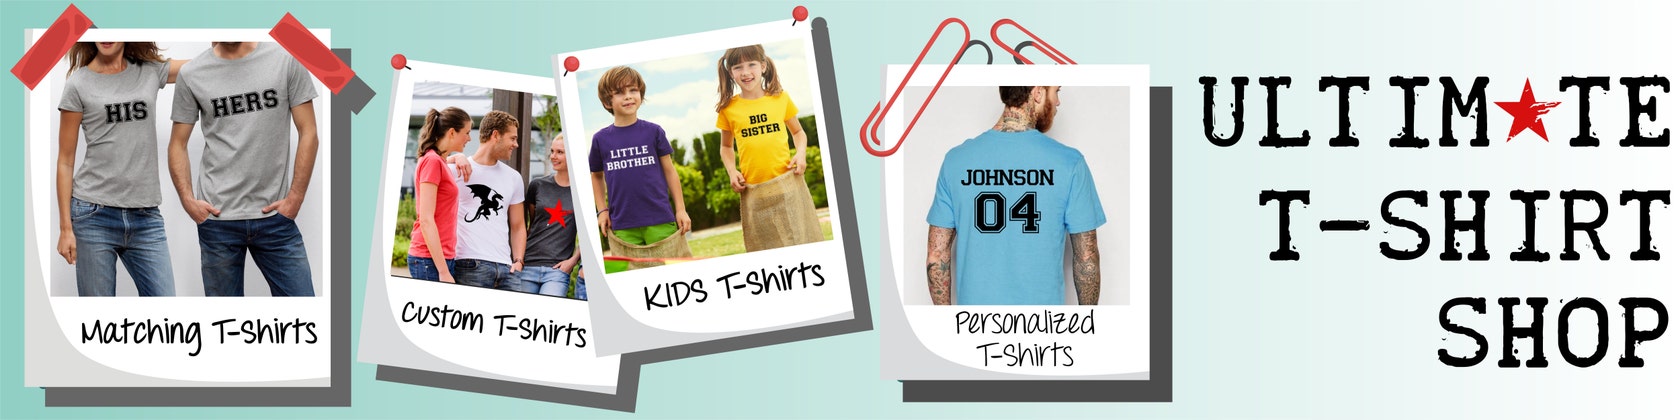 Custom T Shirts Matching T Shirts By Ultimatetshirtshop On Etsy